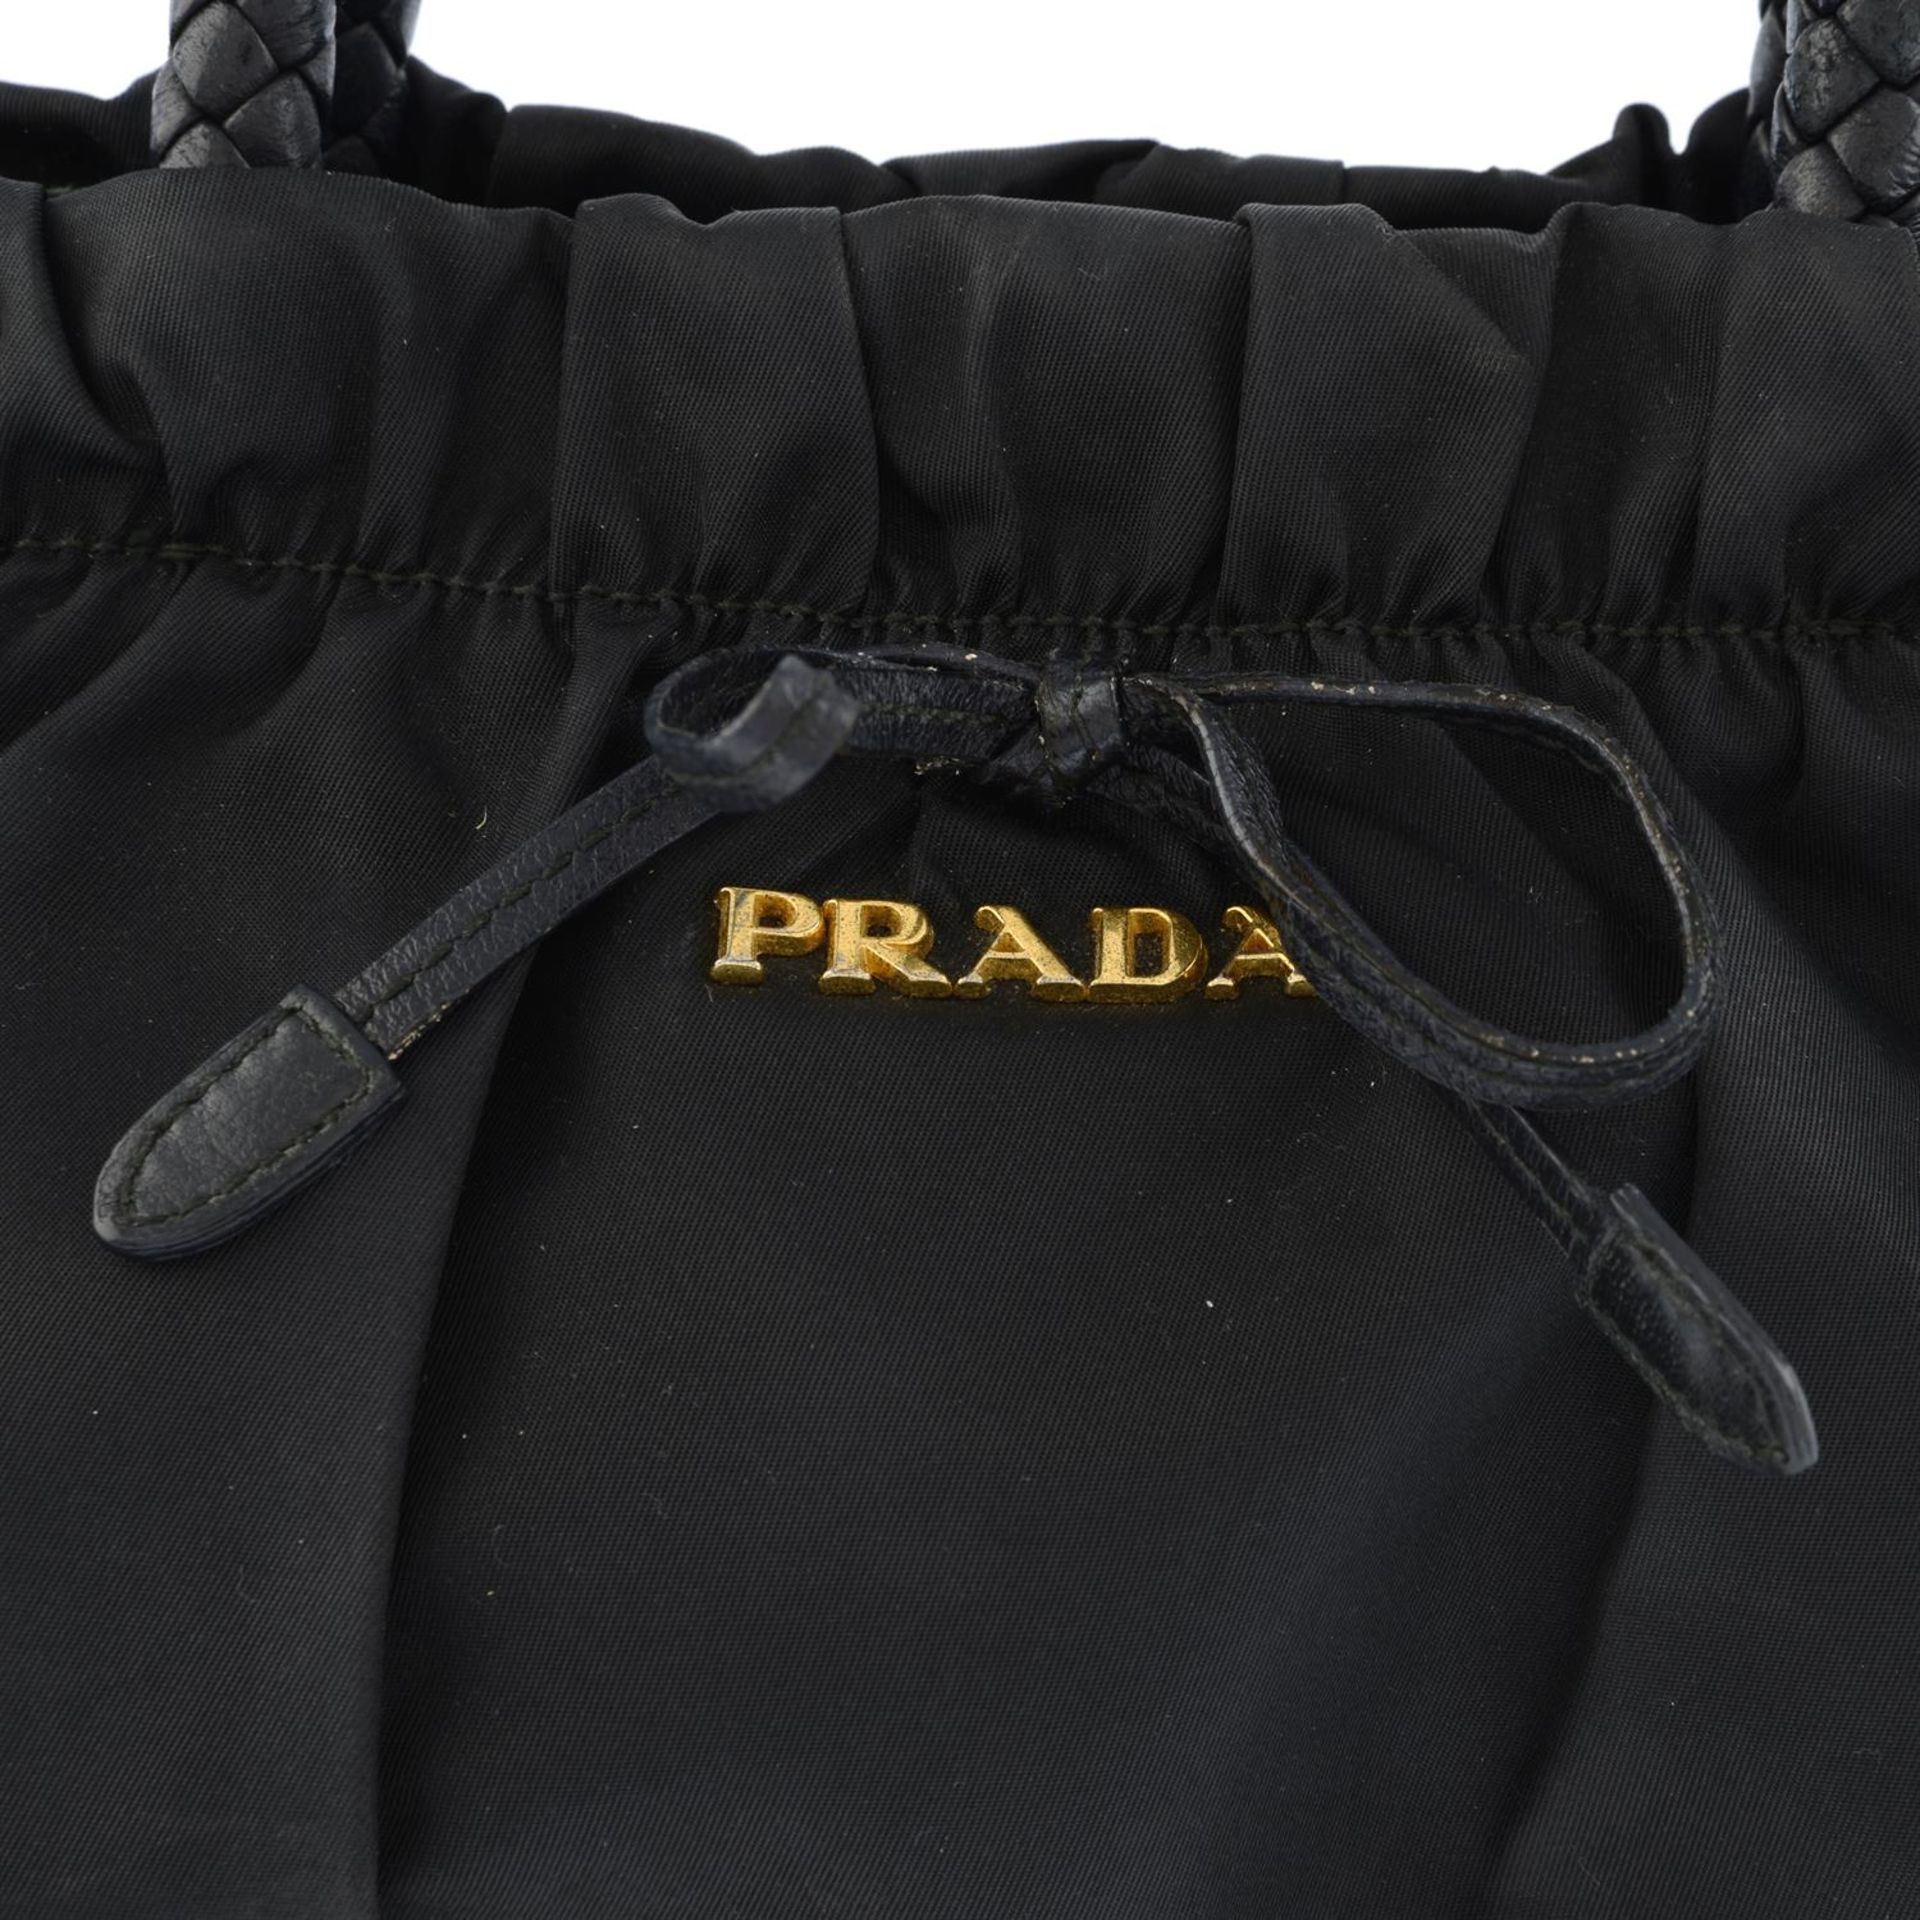 Prada - Tessuto shoulder bag. - Image 4 of 6